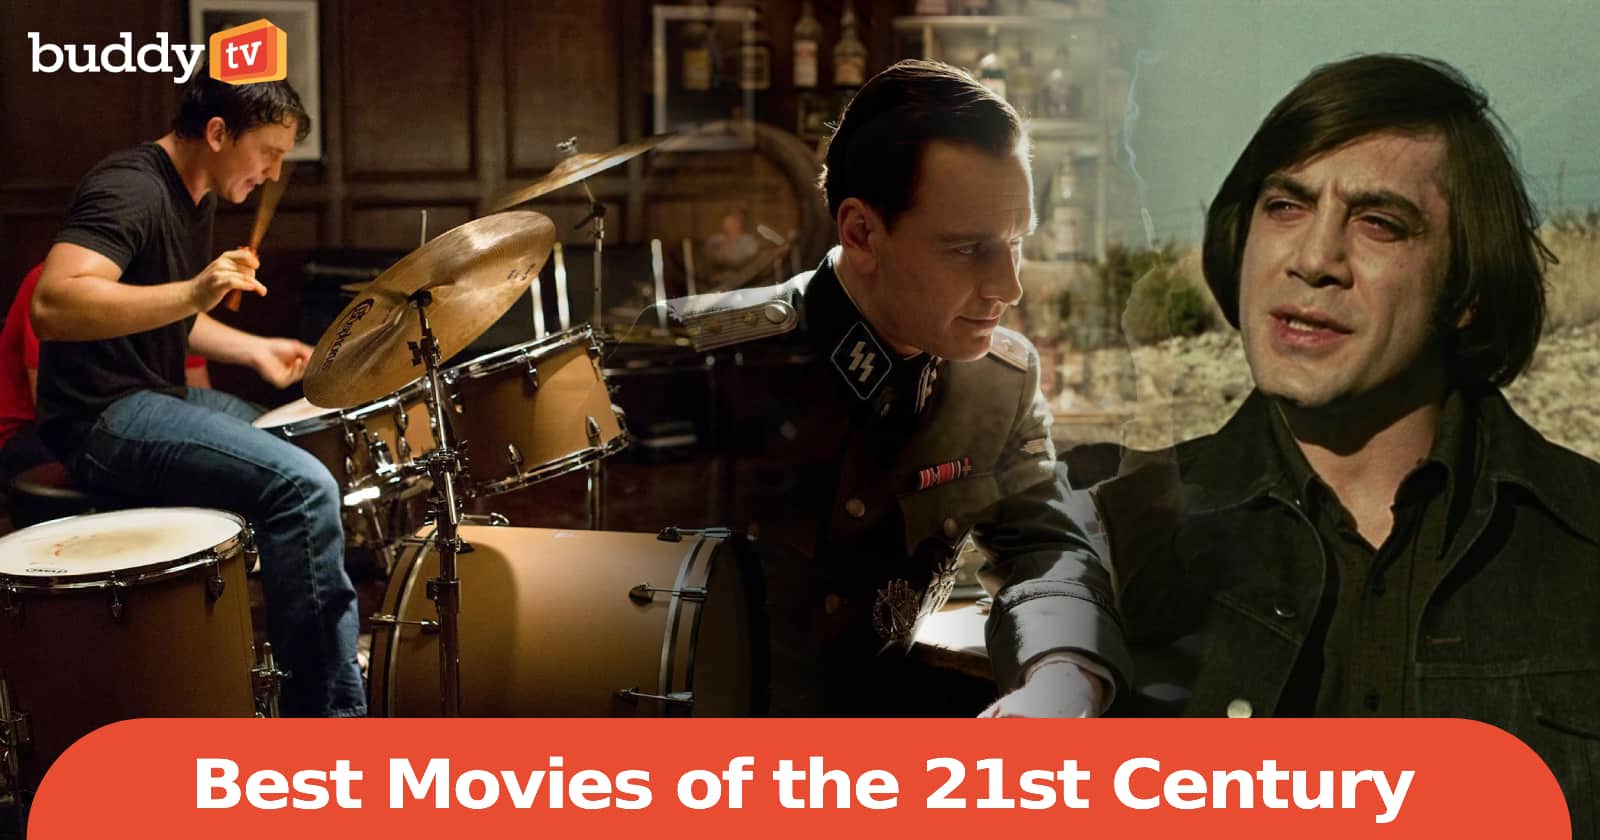 25 Best Action Movies of the 21st Century, According to IMDb - BuddyTV